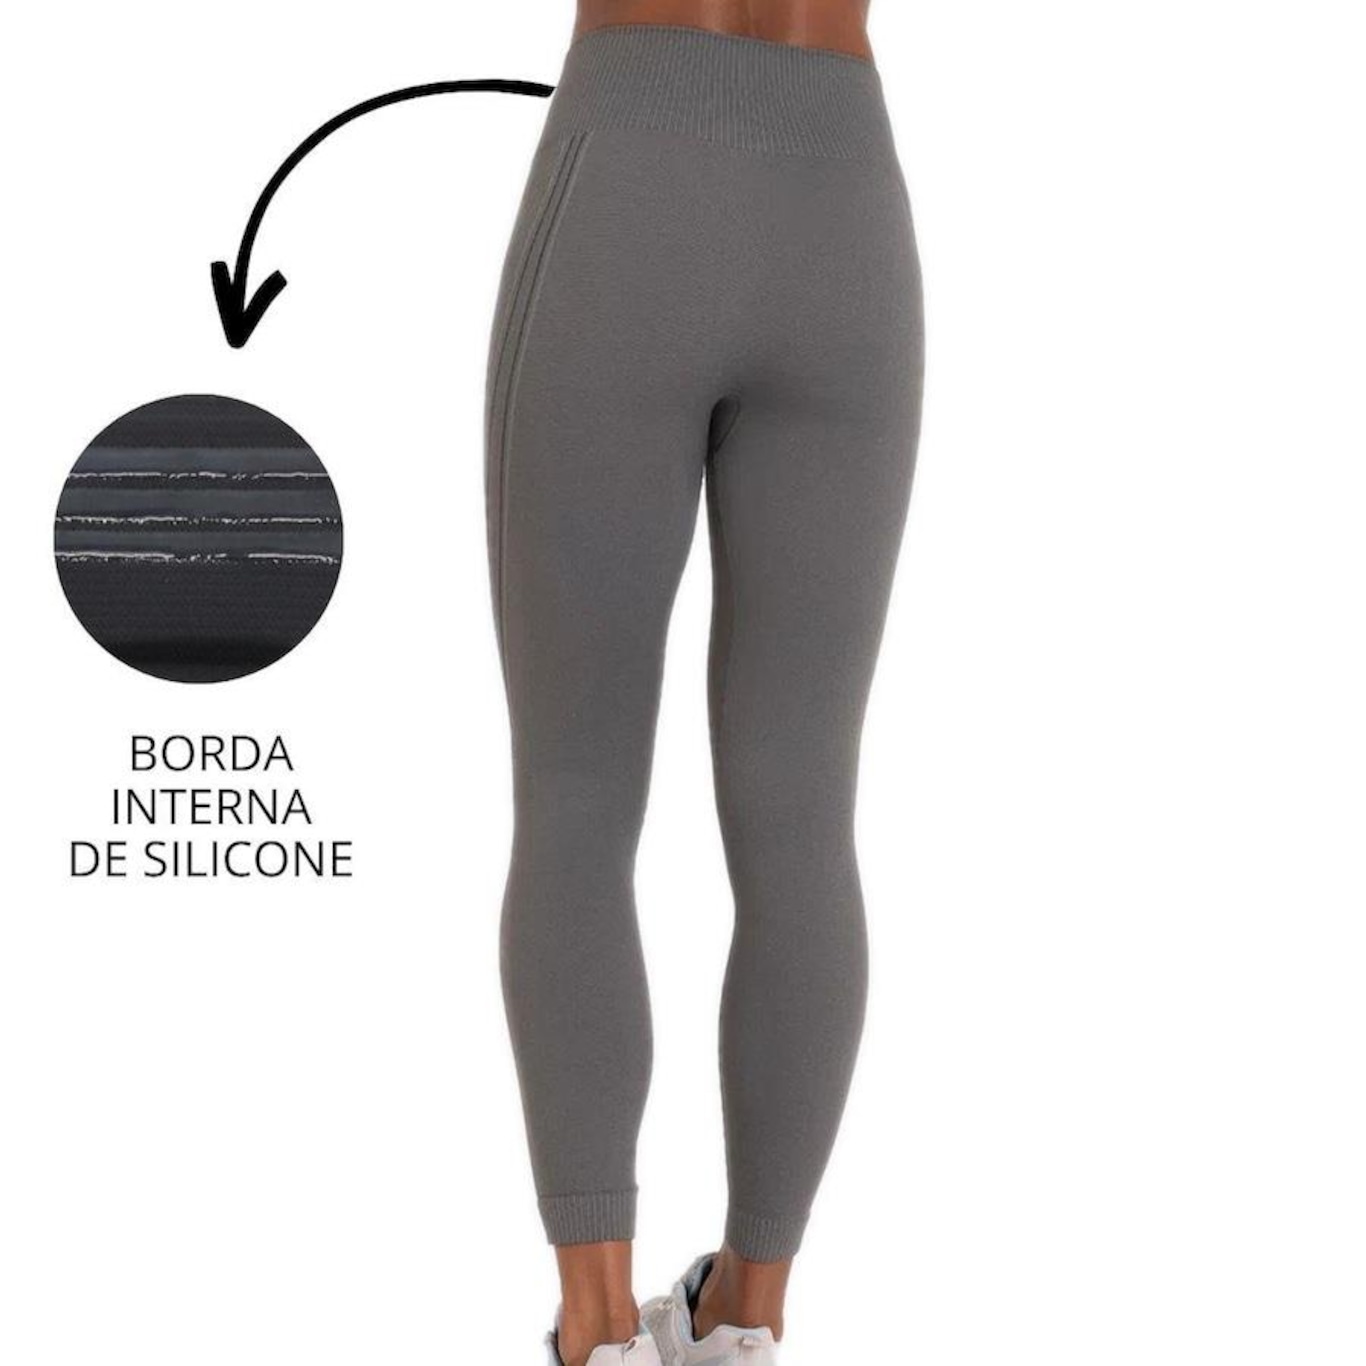 Calça Lupo Sport Legging sem Costura - Feminina